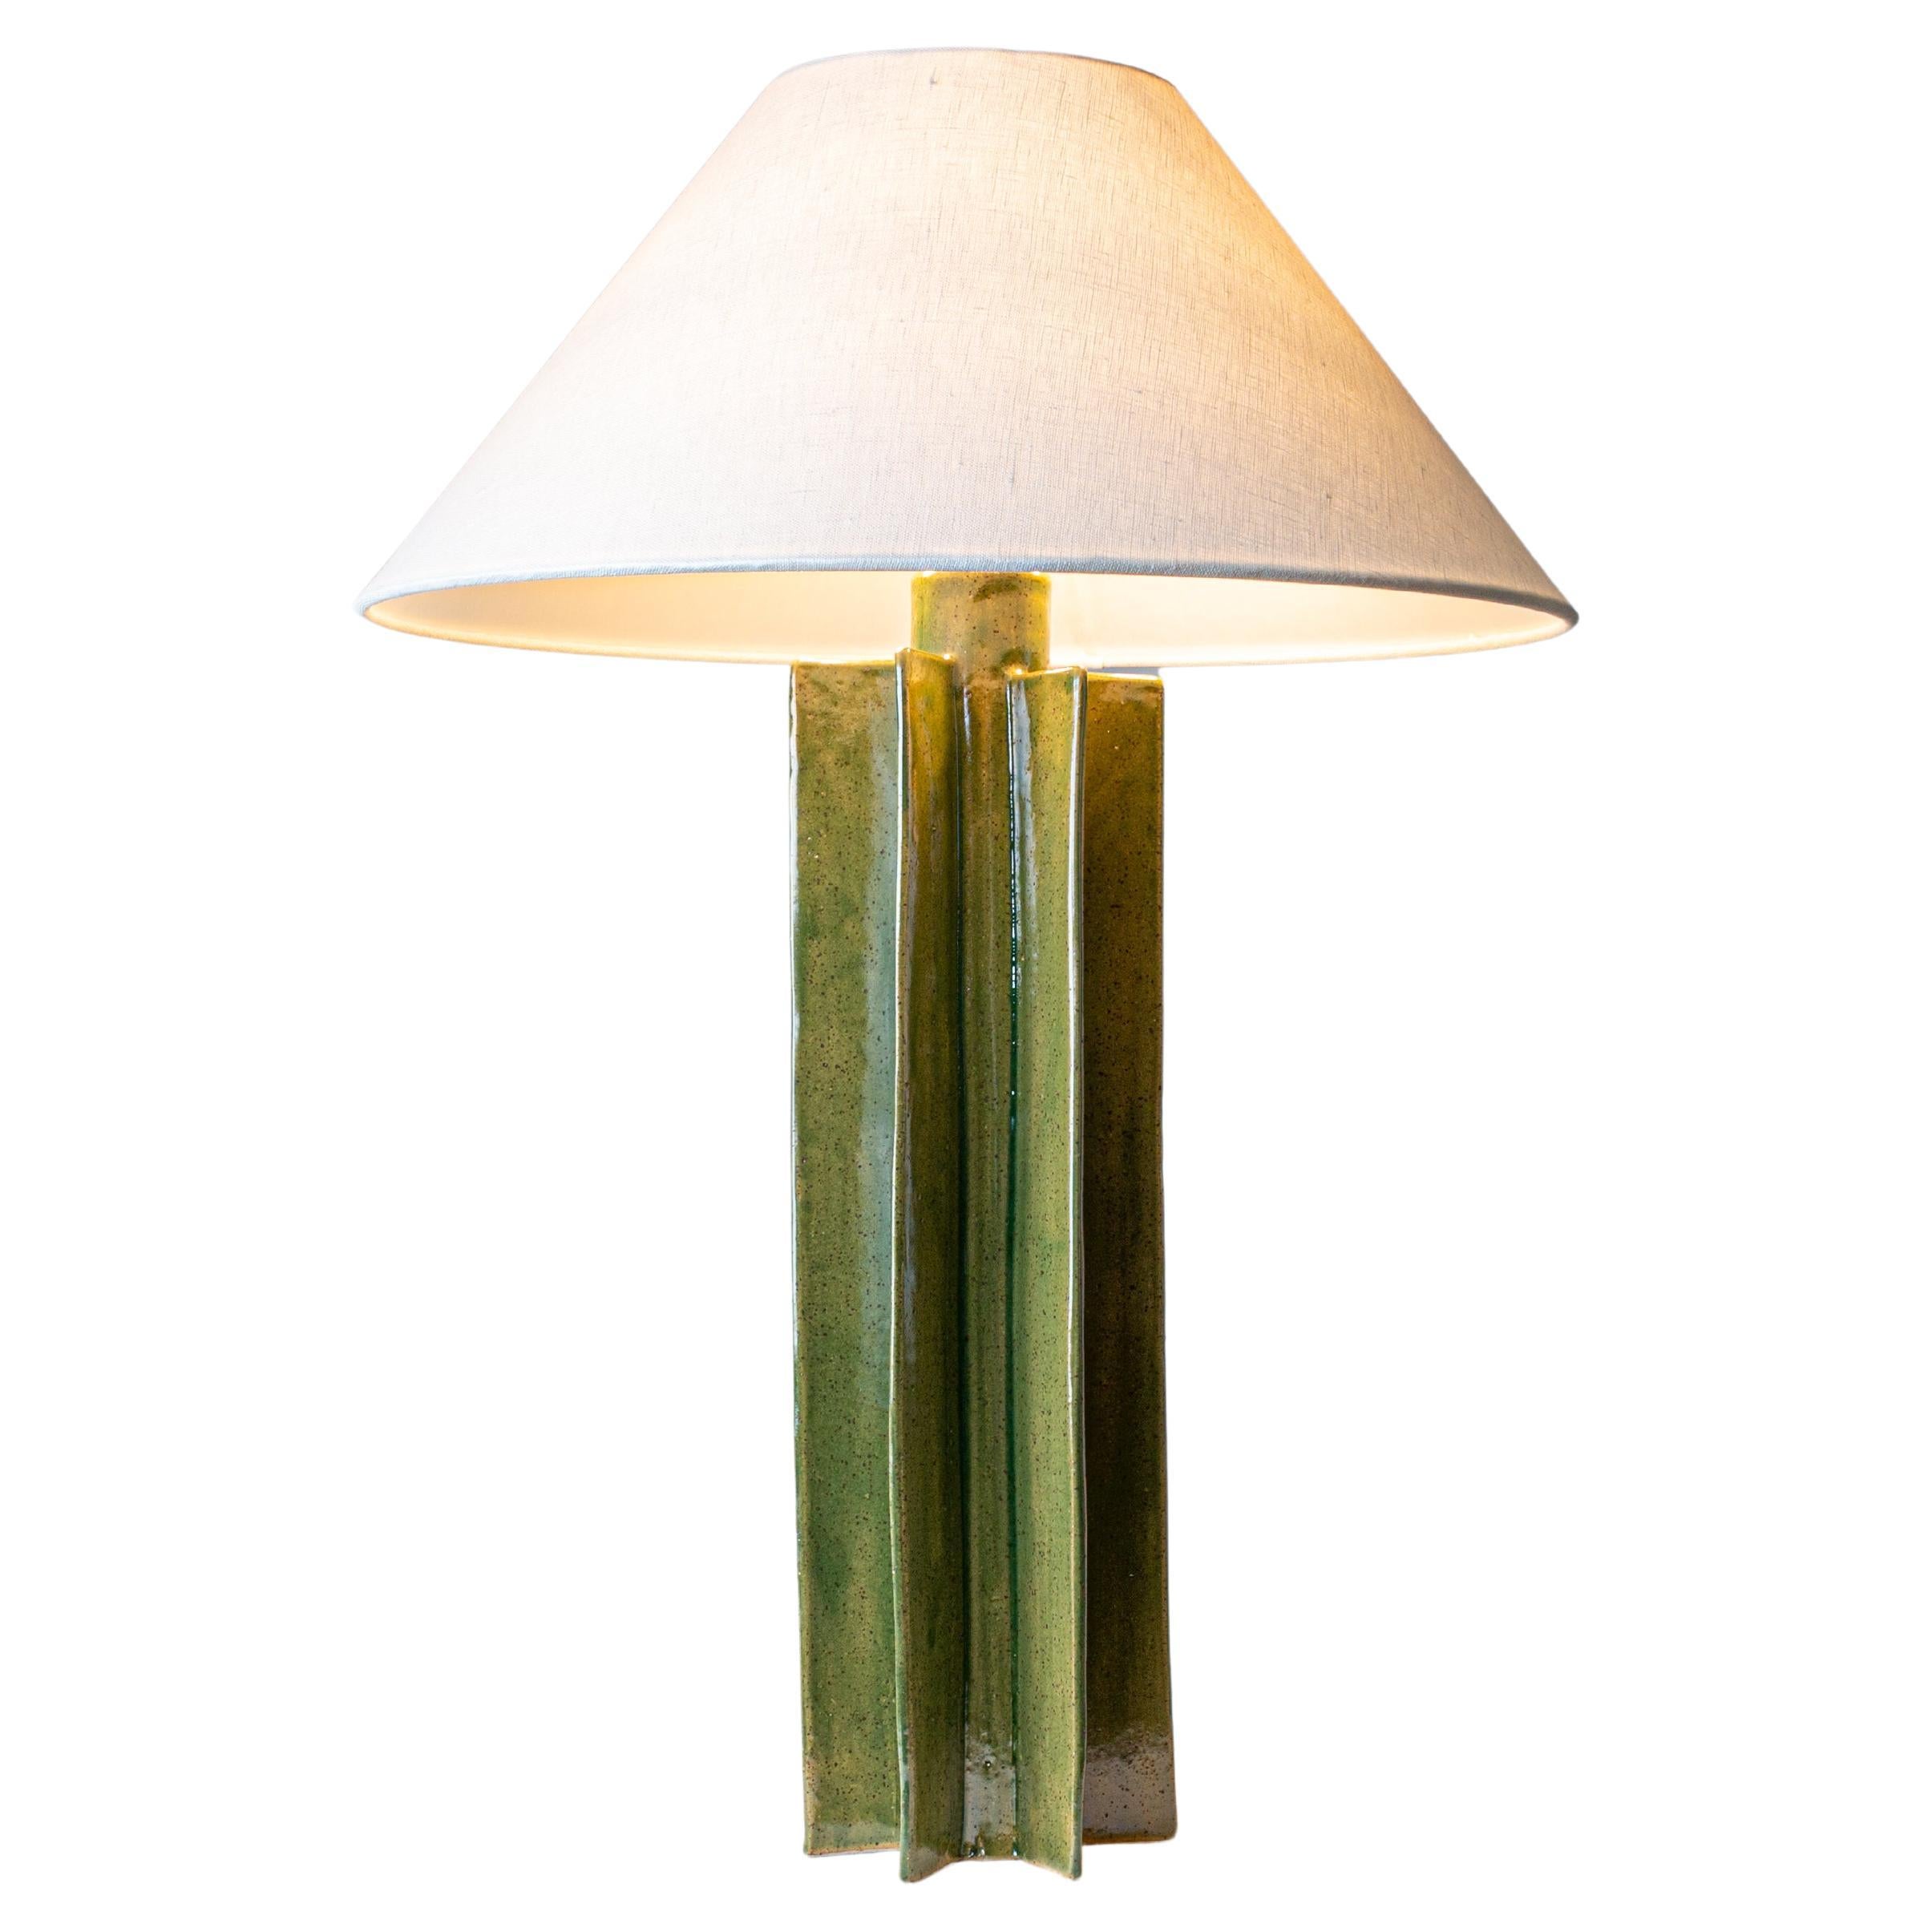 FIN Shade Table Lamp, Green Glaze Finish, hanbuilt ceramic lamp by Kalin Asenov